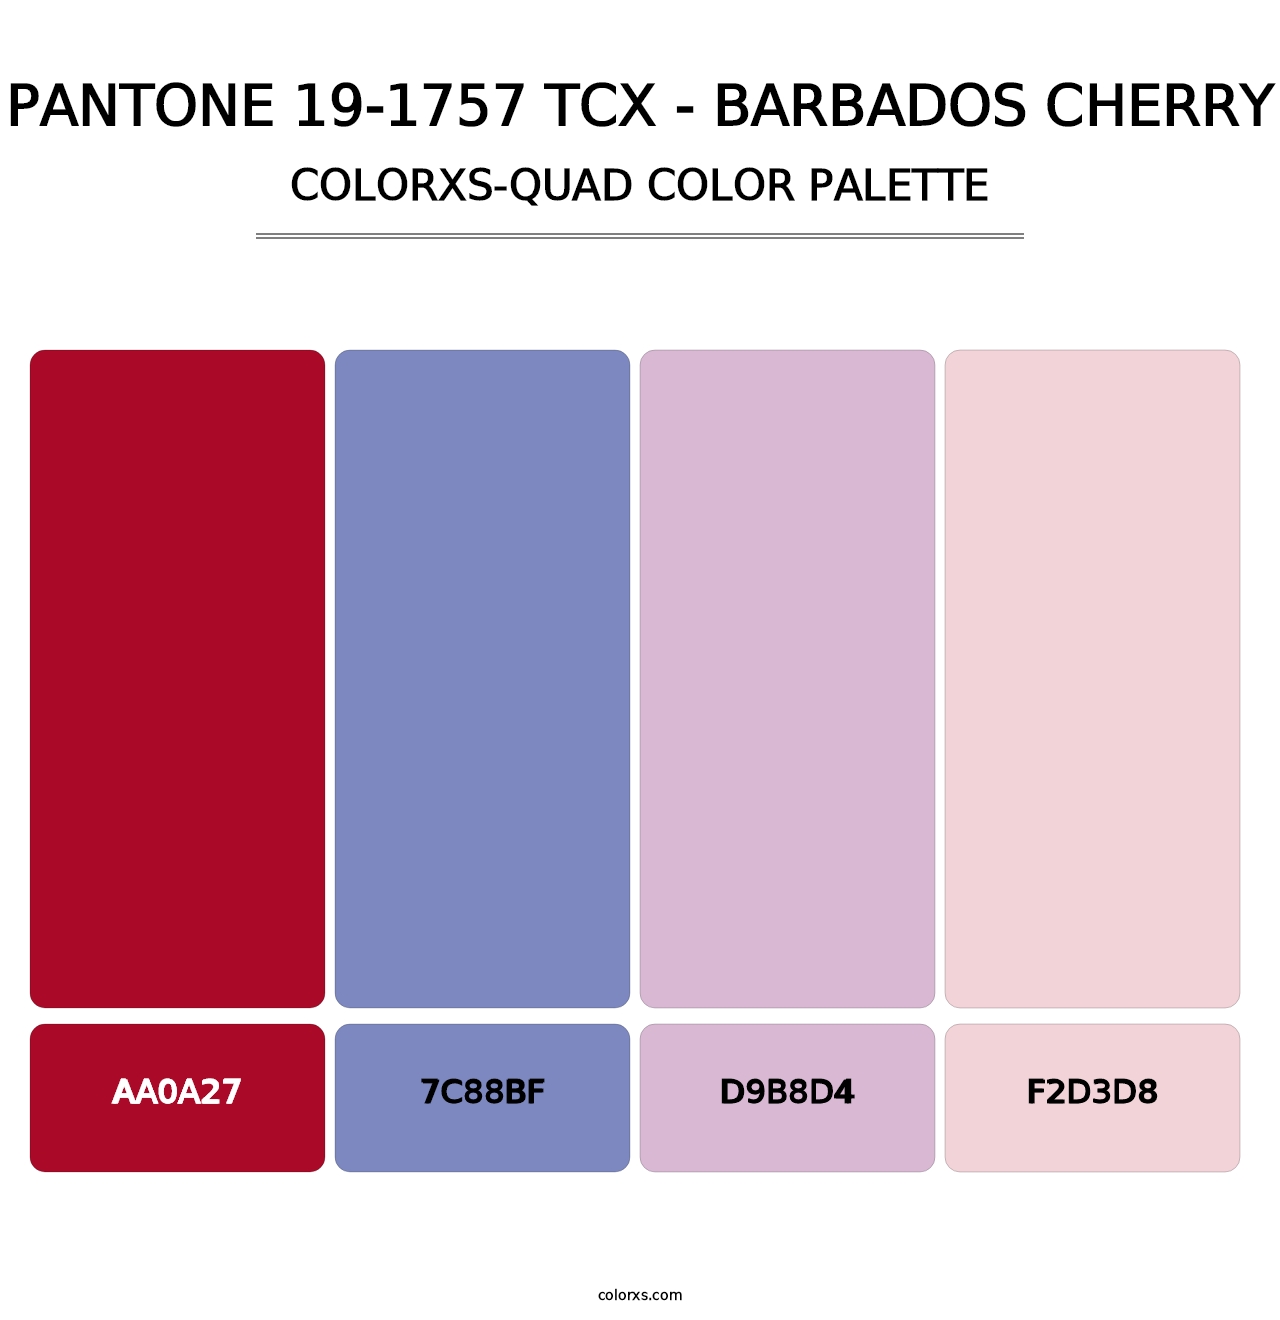 PANTONE 19-1757 TCX - Barbados Cherry - Colorxs Quad Palette